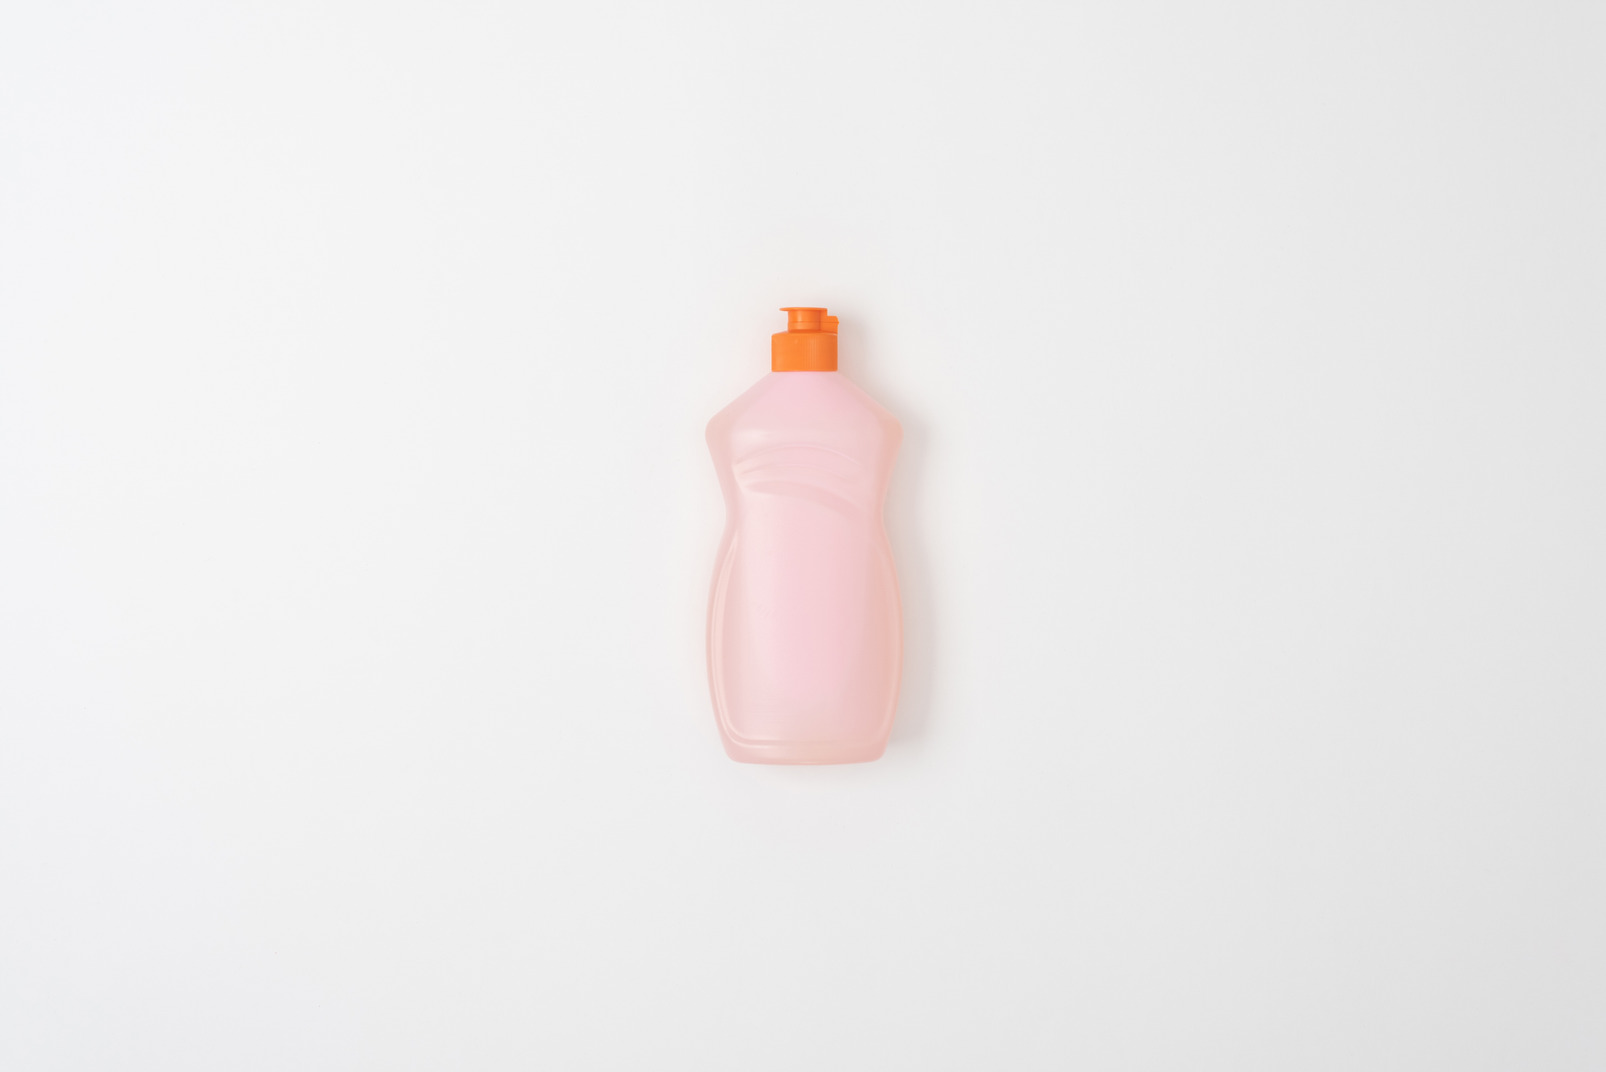 Pink bottle with orange cap